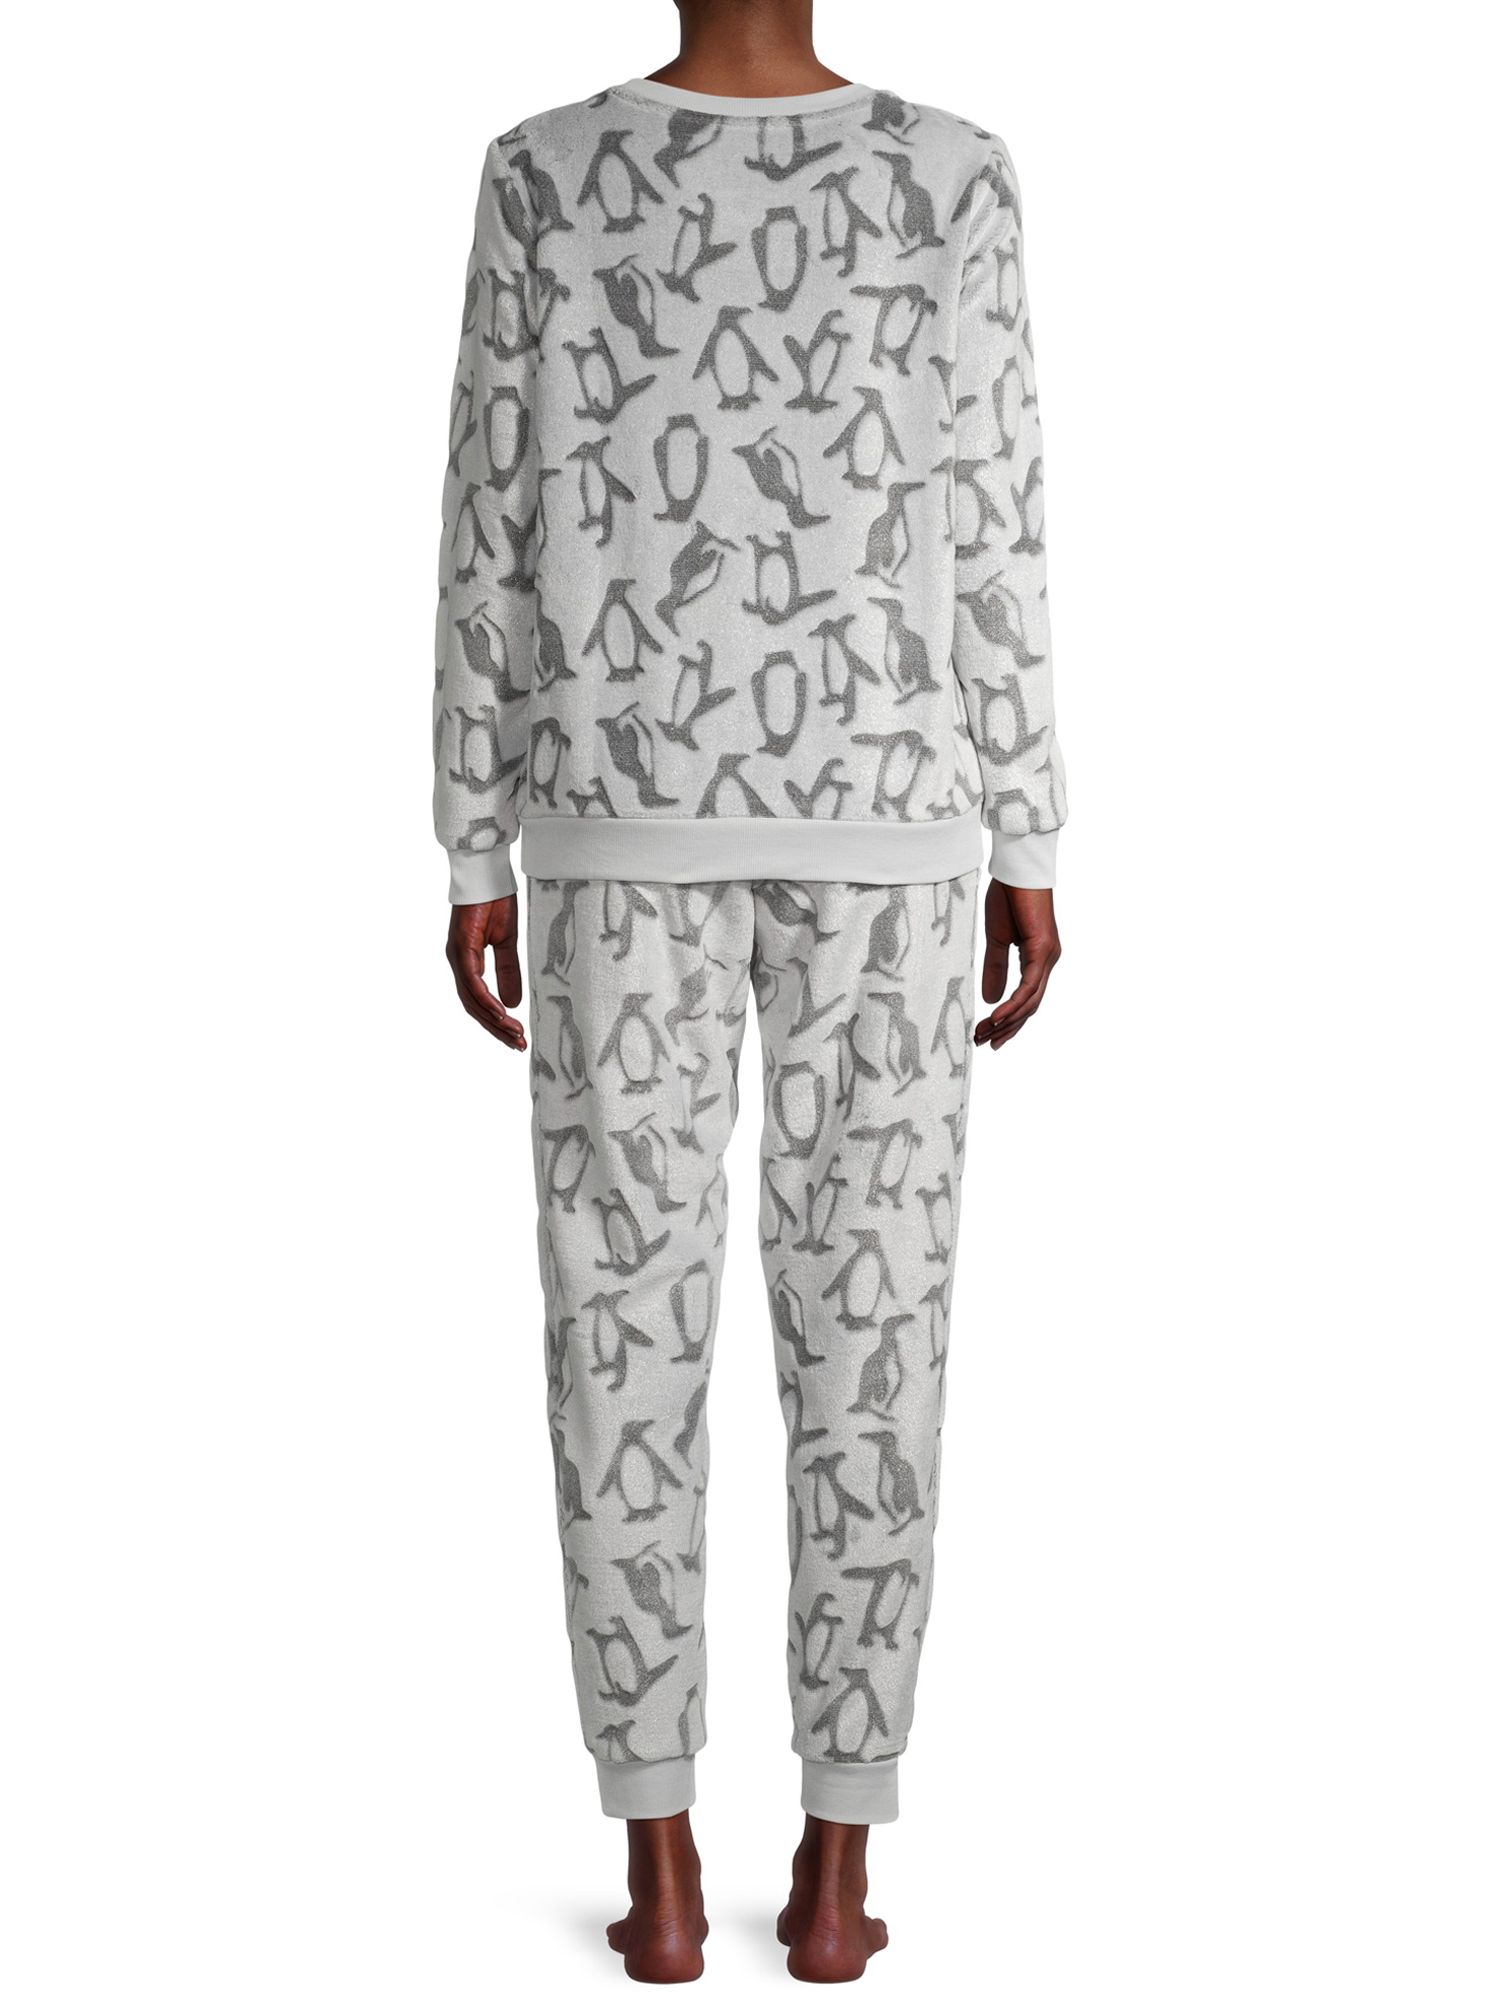 George Women's and Women's Plus 2-Piece Plush Pajama Set - image 3 of 6